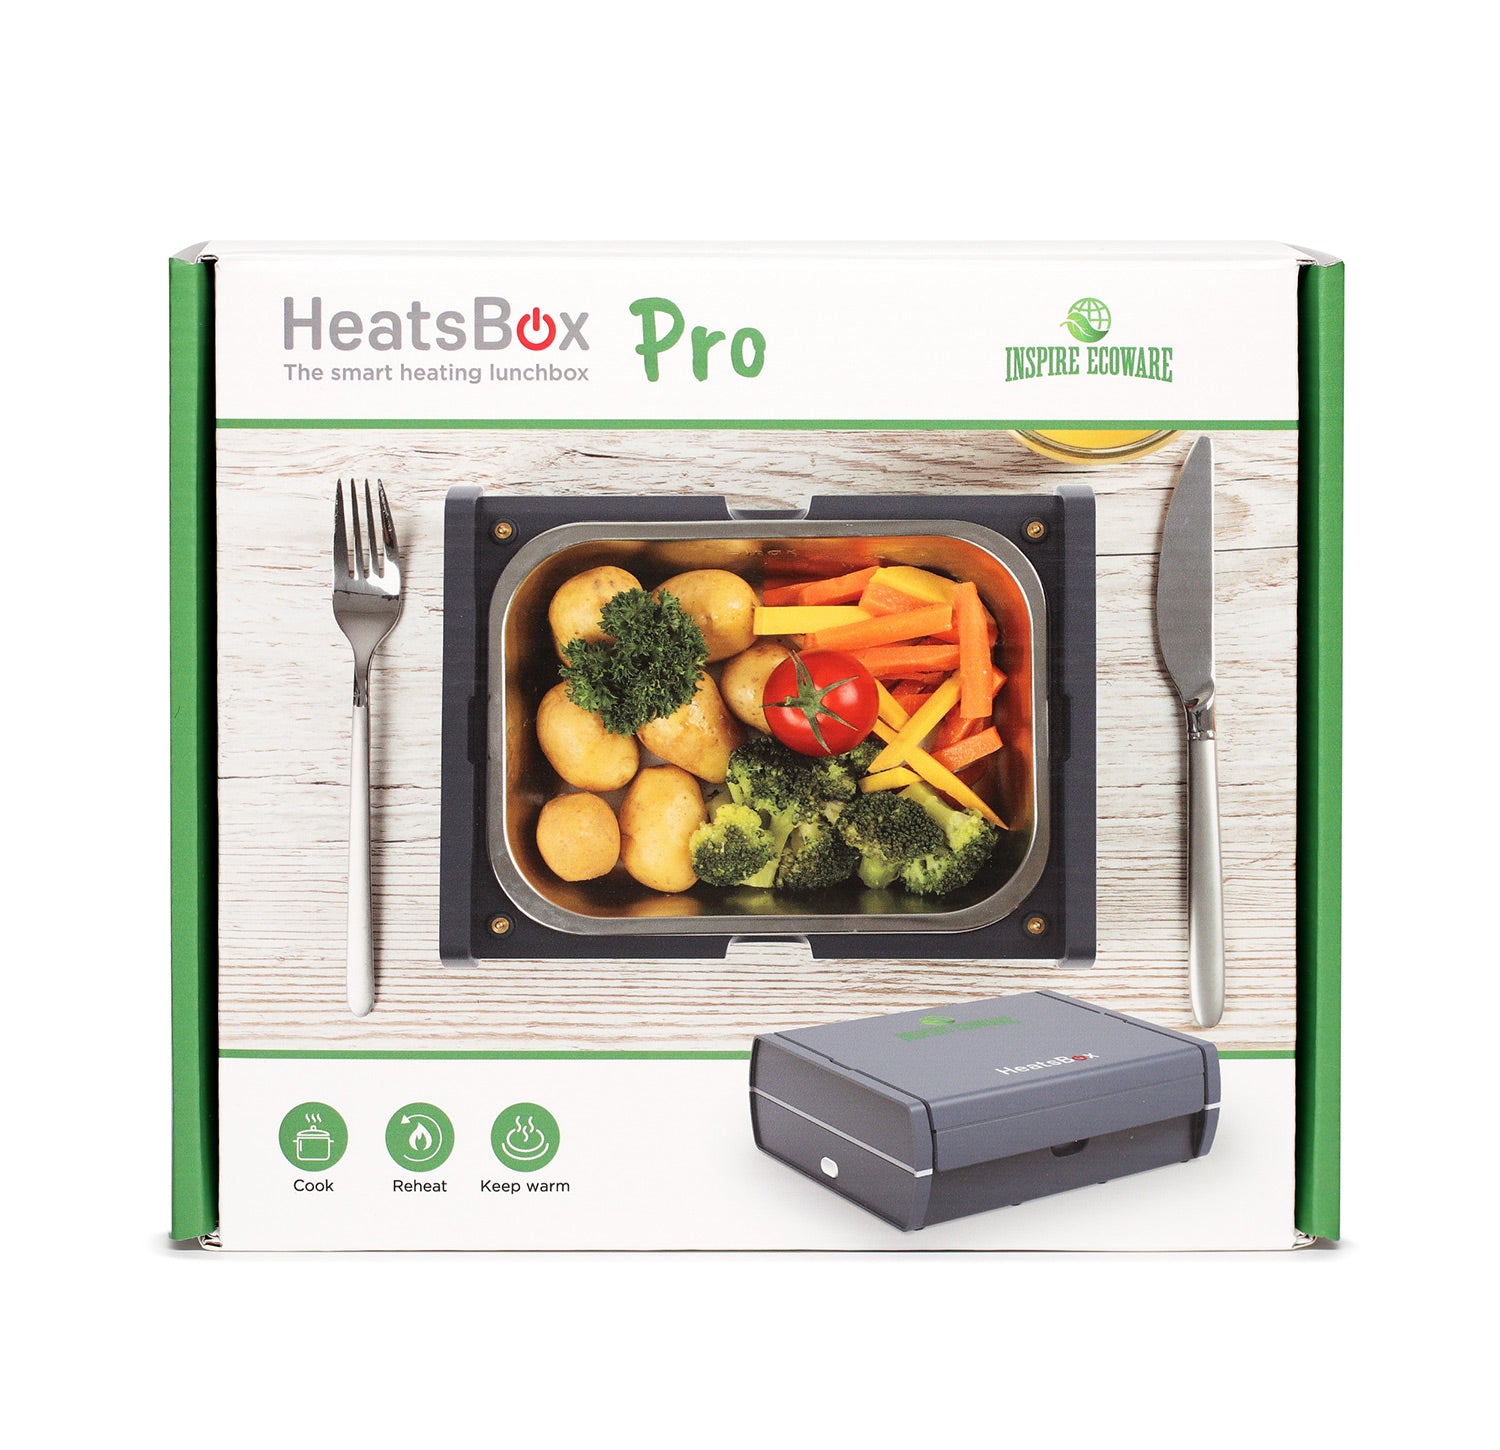 Heat Box